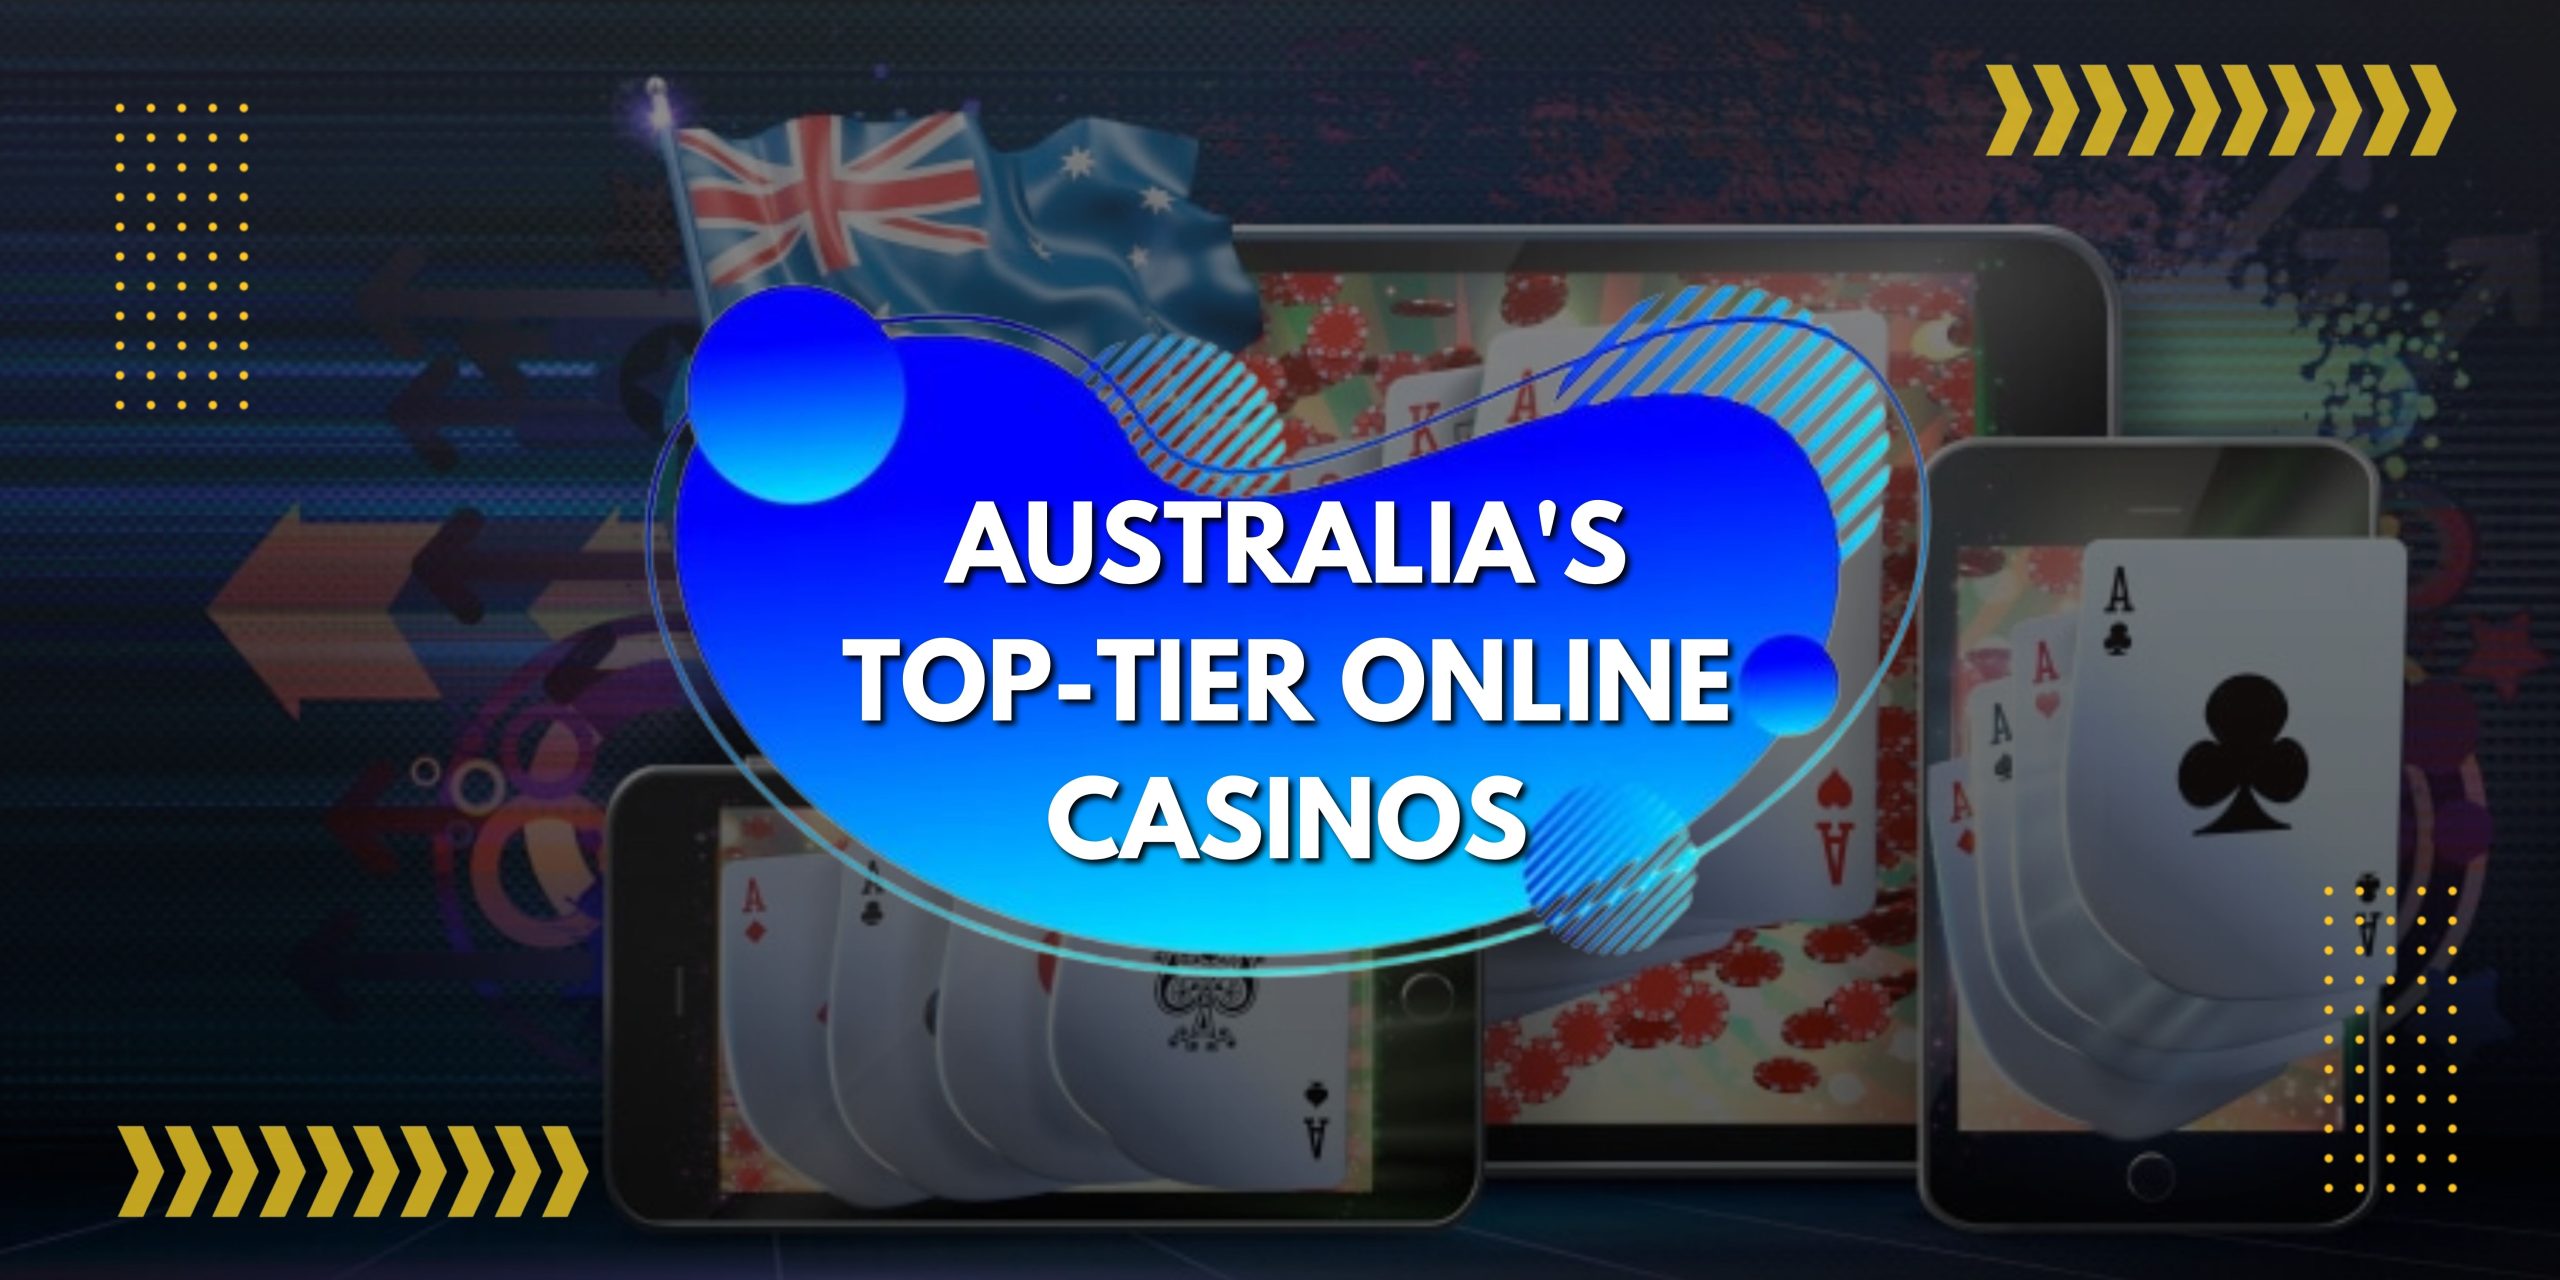 A Gateway to Australia's Top-Tier Online Casinos